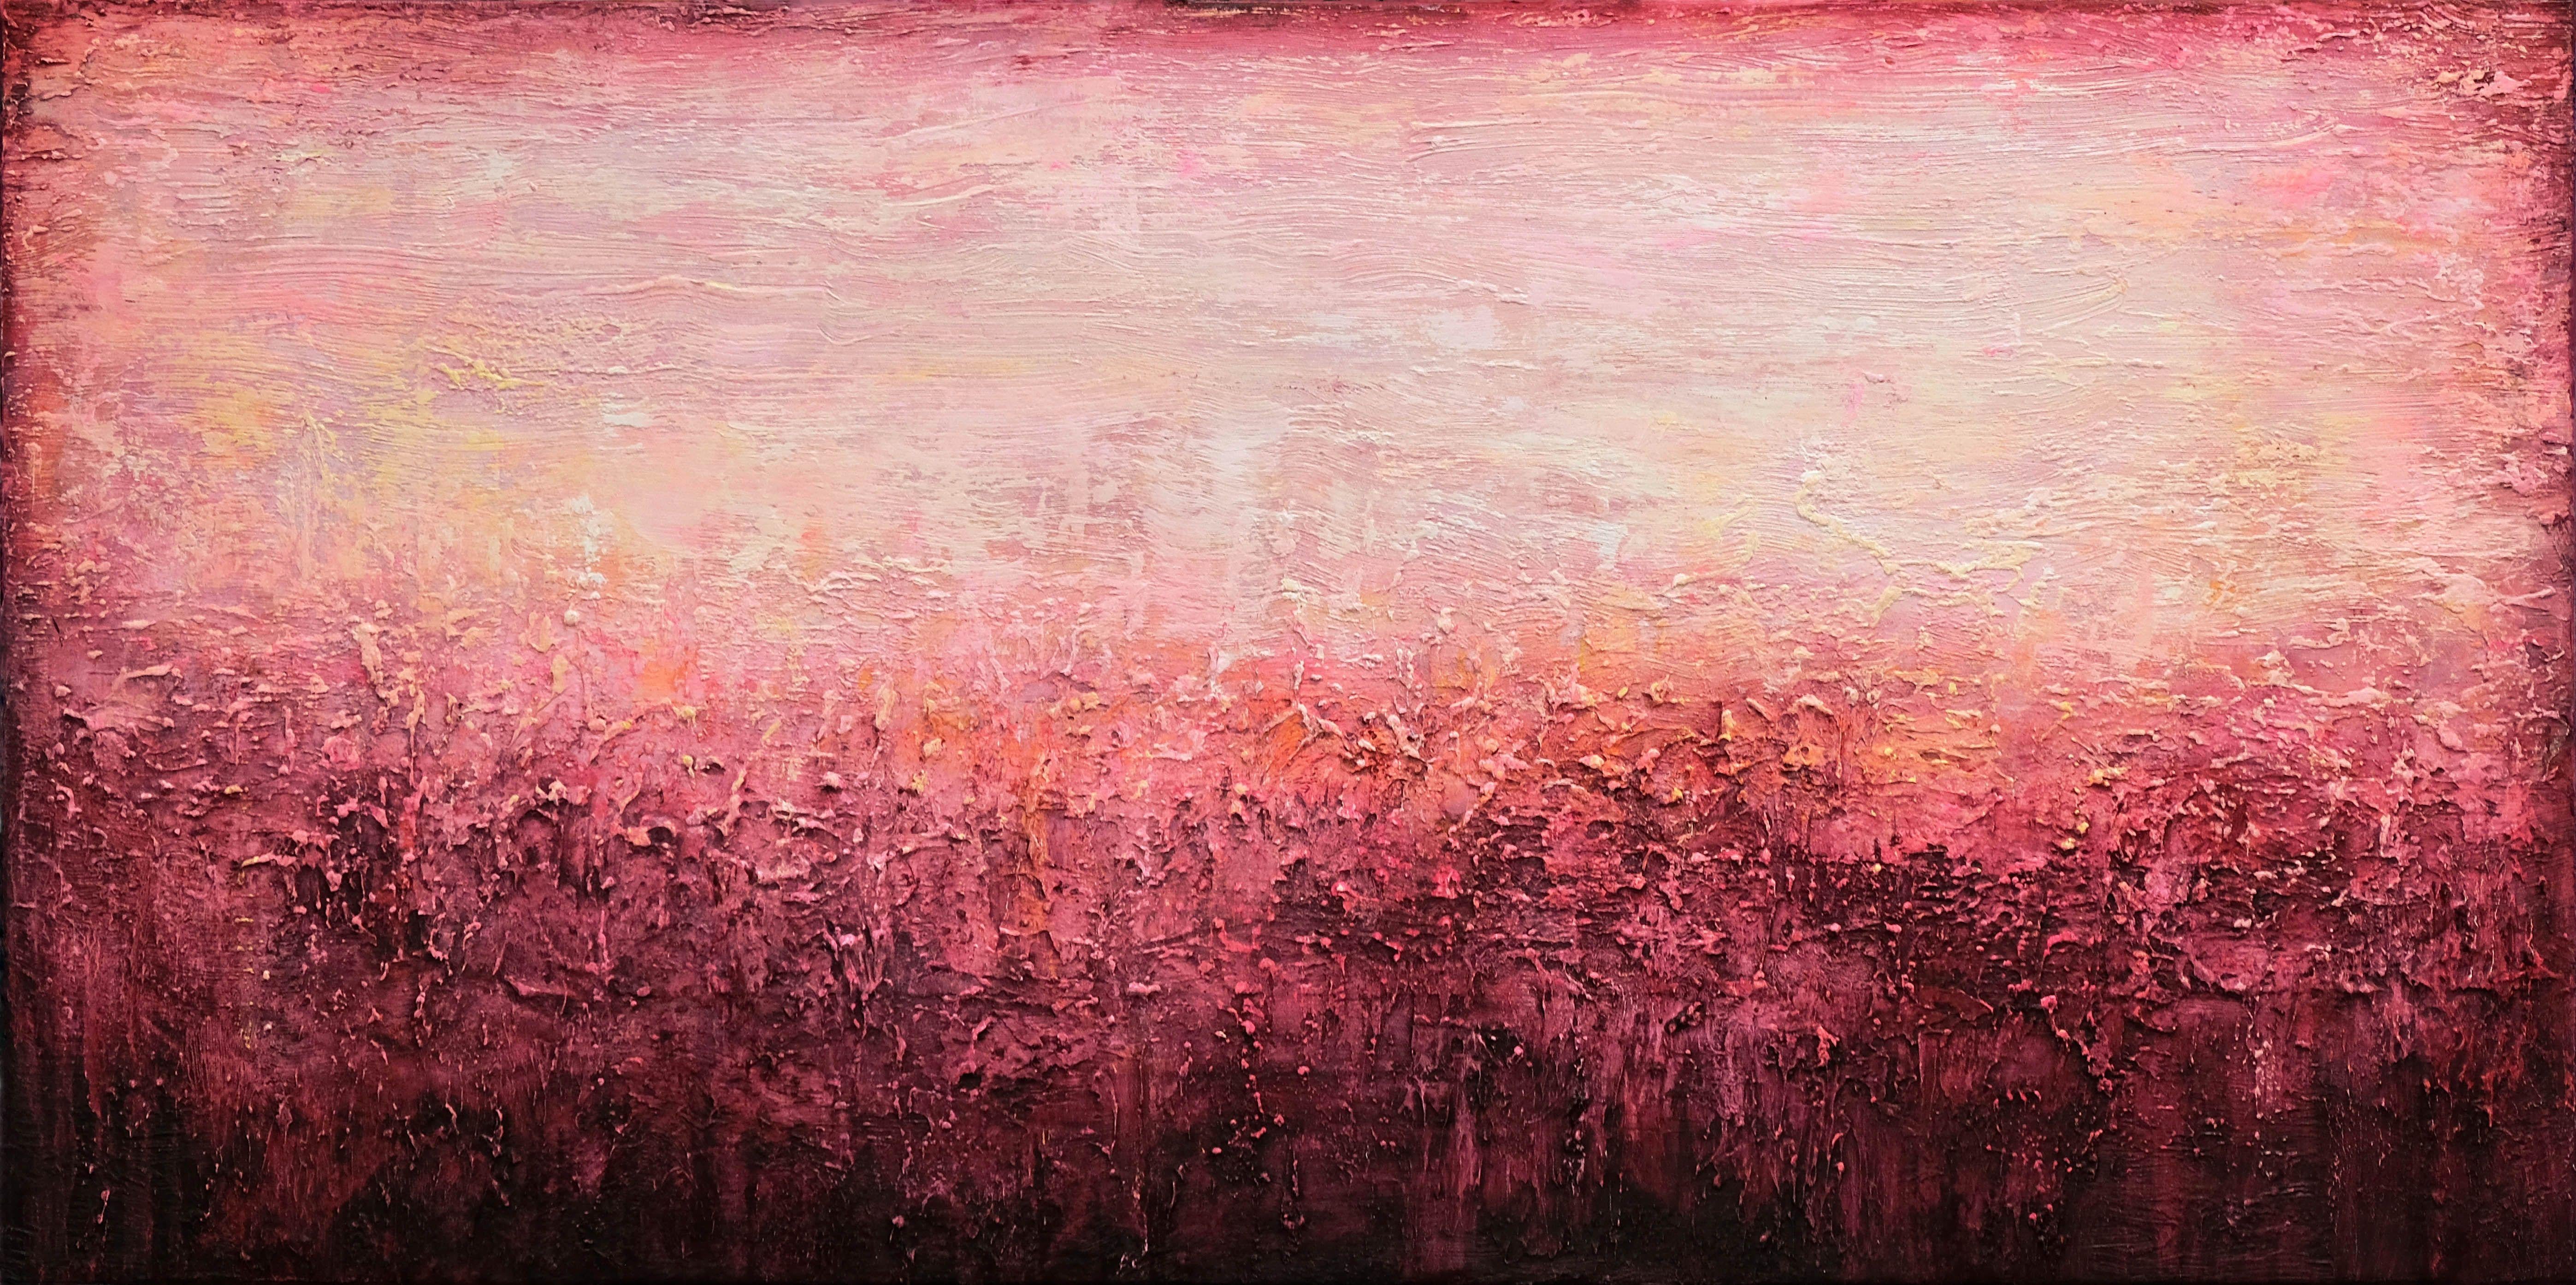 Behshad Arjomandi Abstract Painting - Abstract Sunset Landscape VIII, Painting, Oil on Canvas